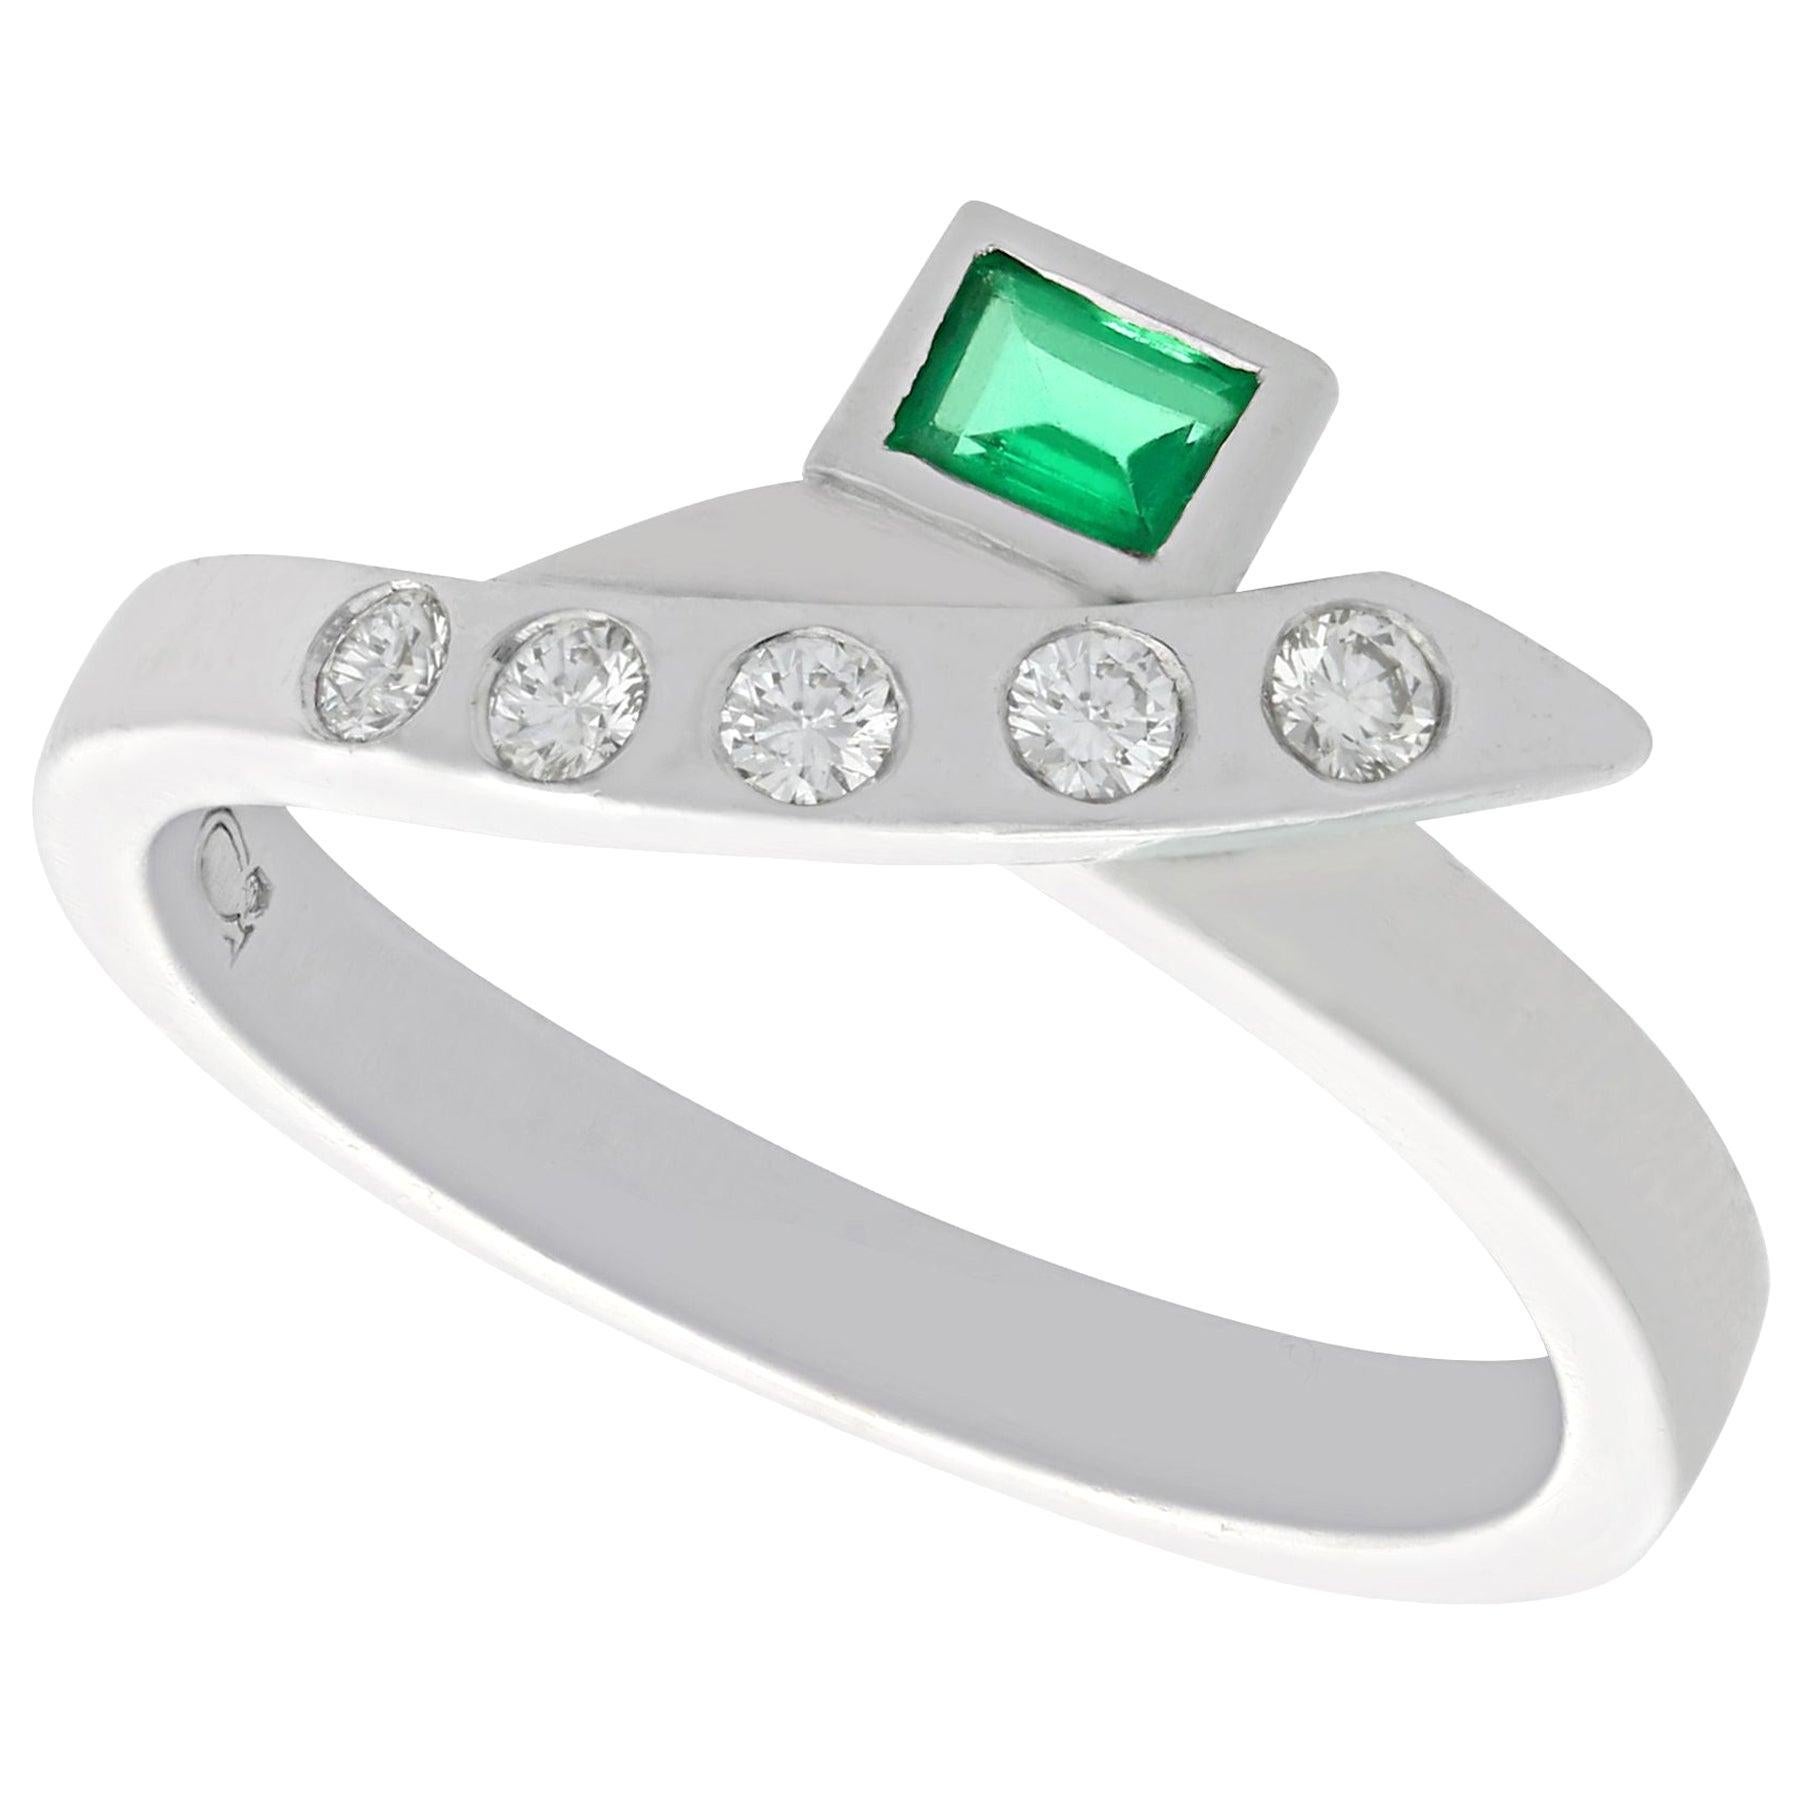 Vintage Emerald and Diamond Platinum Cocktail Ring